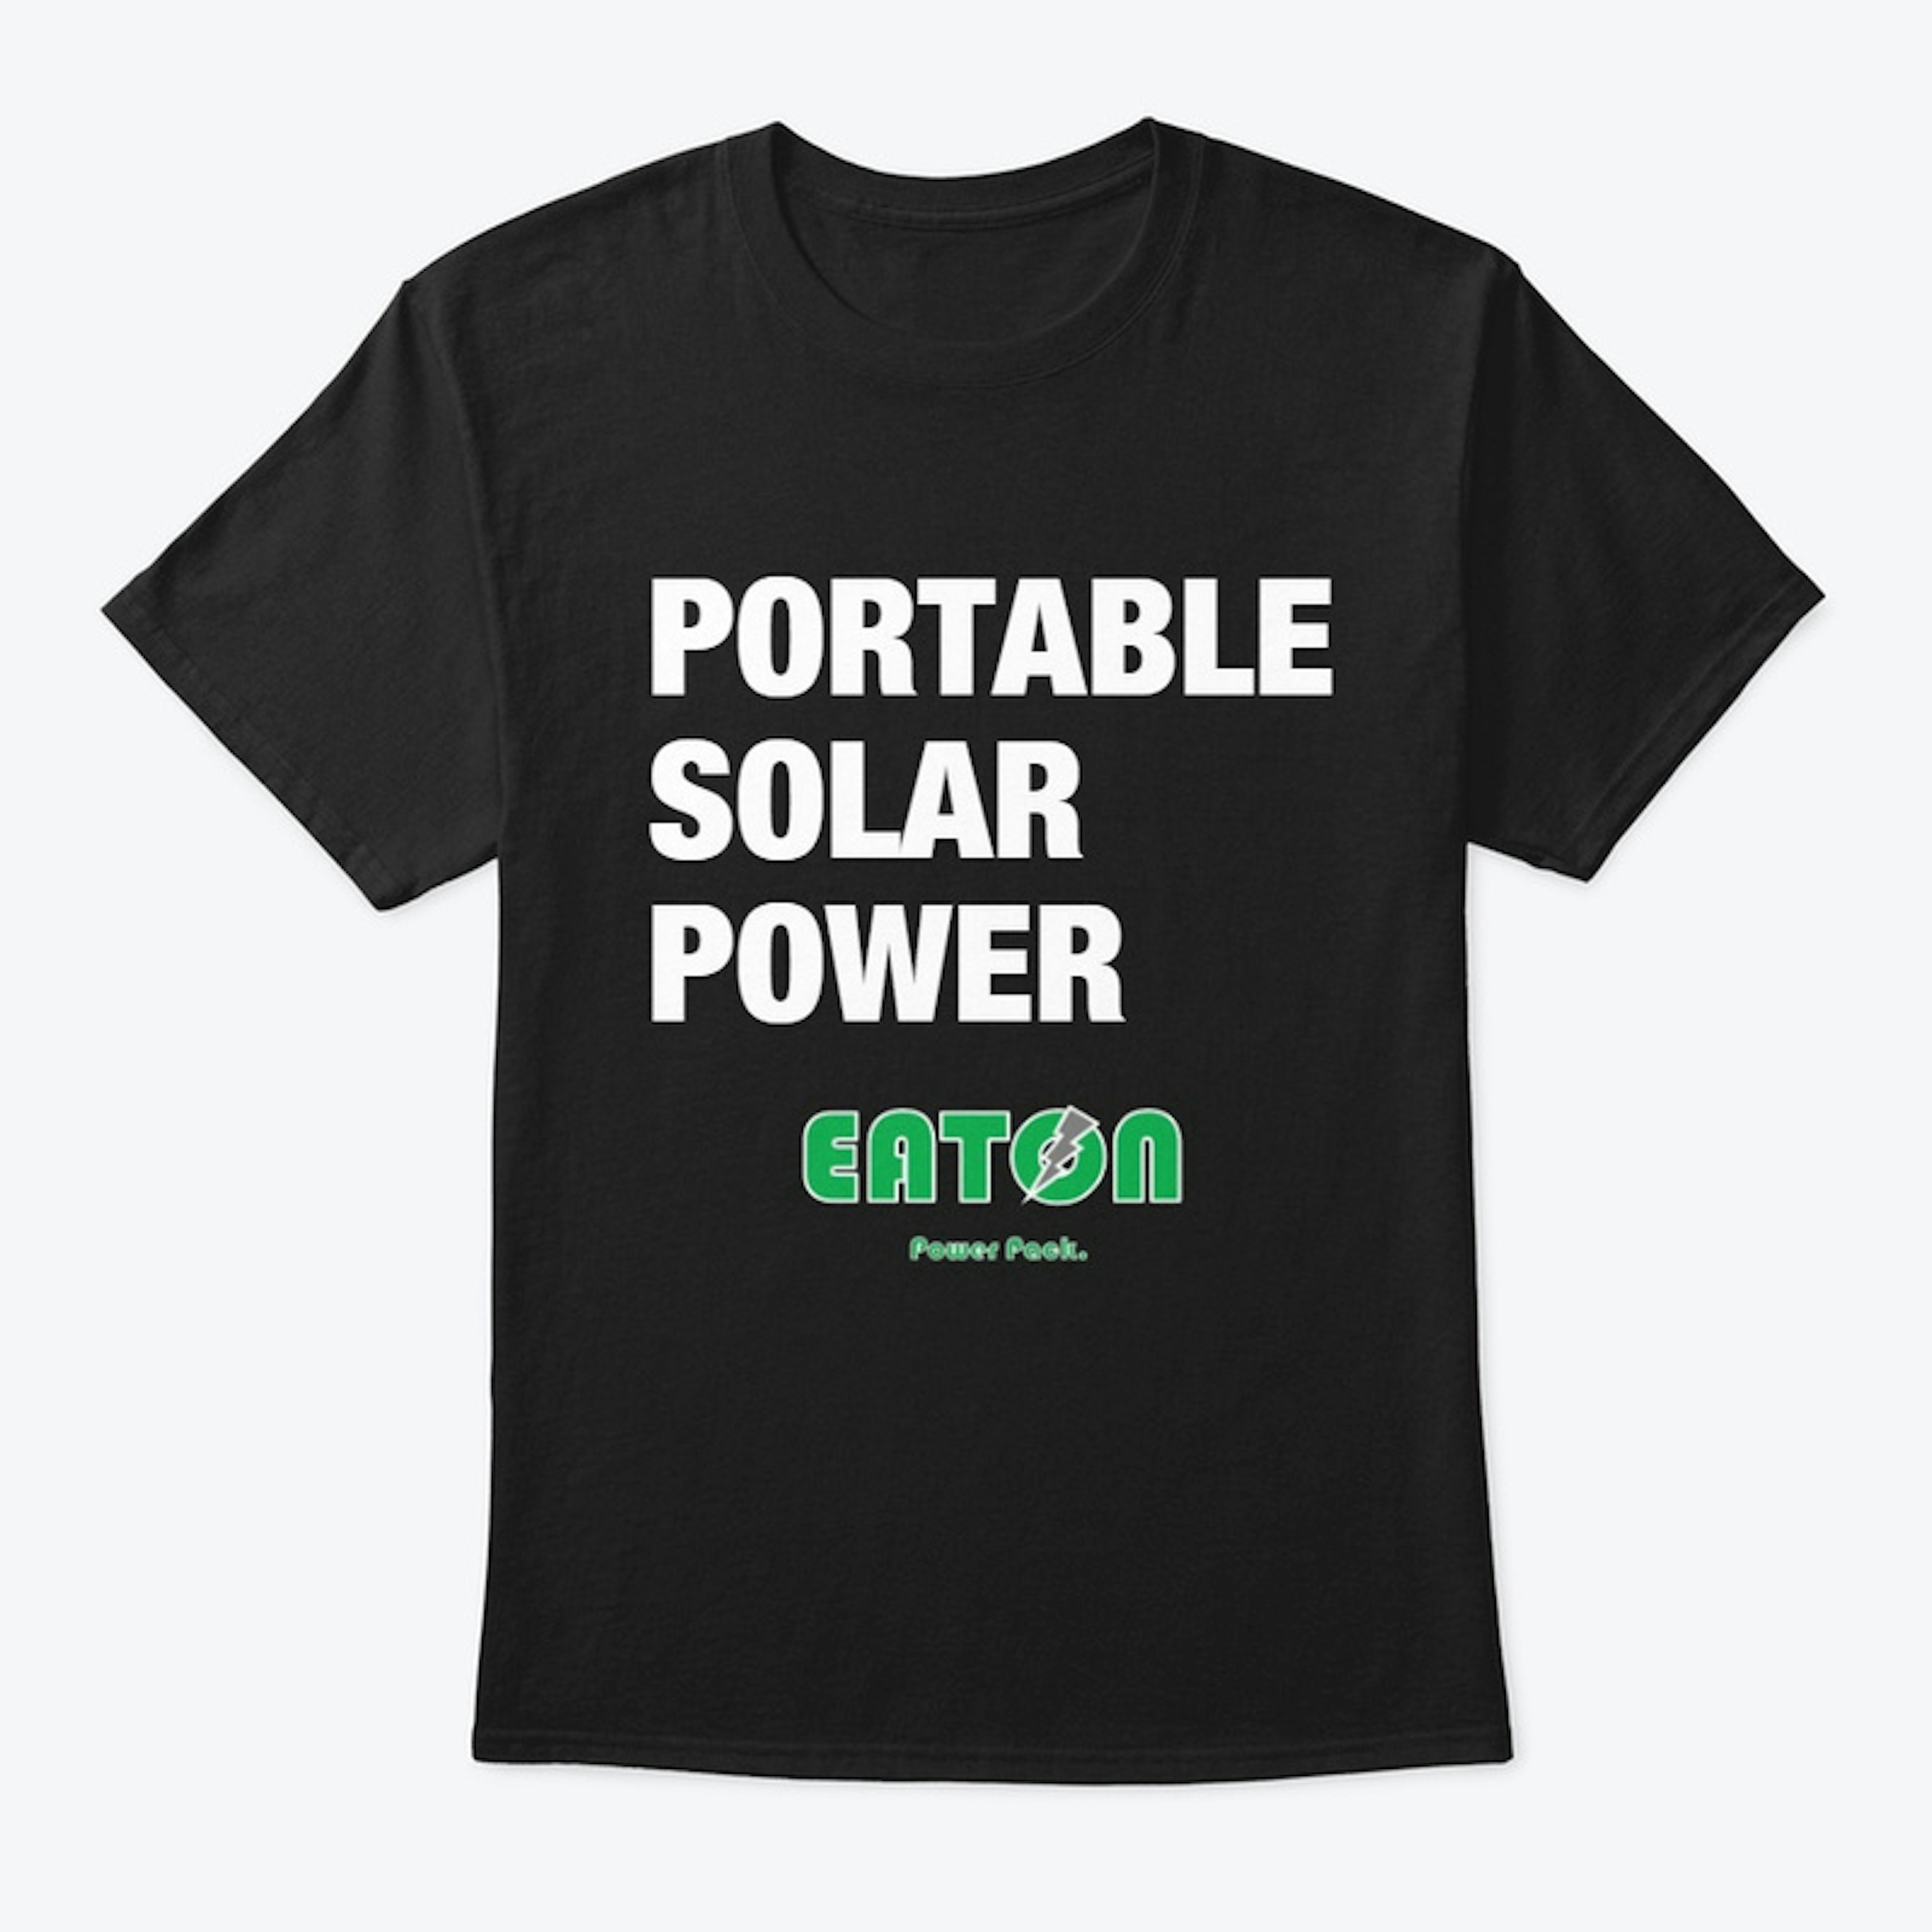 Portable Solar Power - Eaton Power Pack